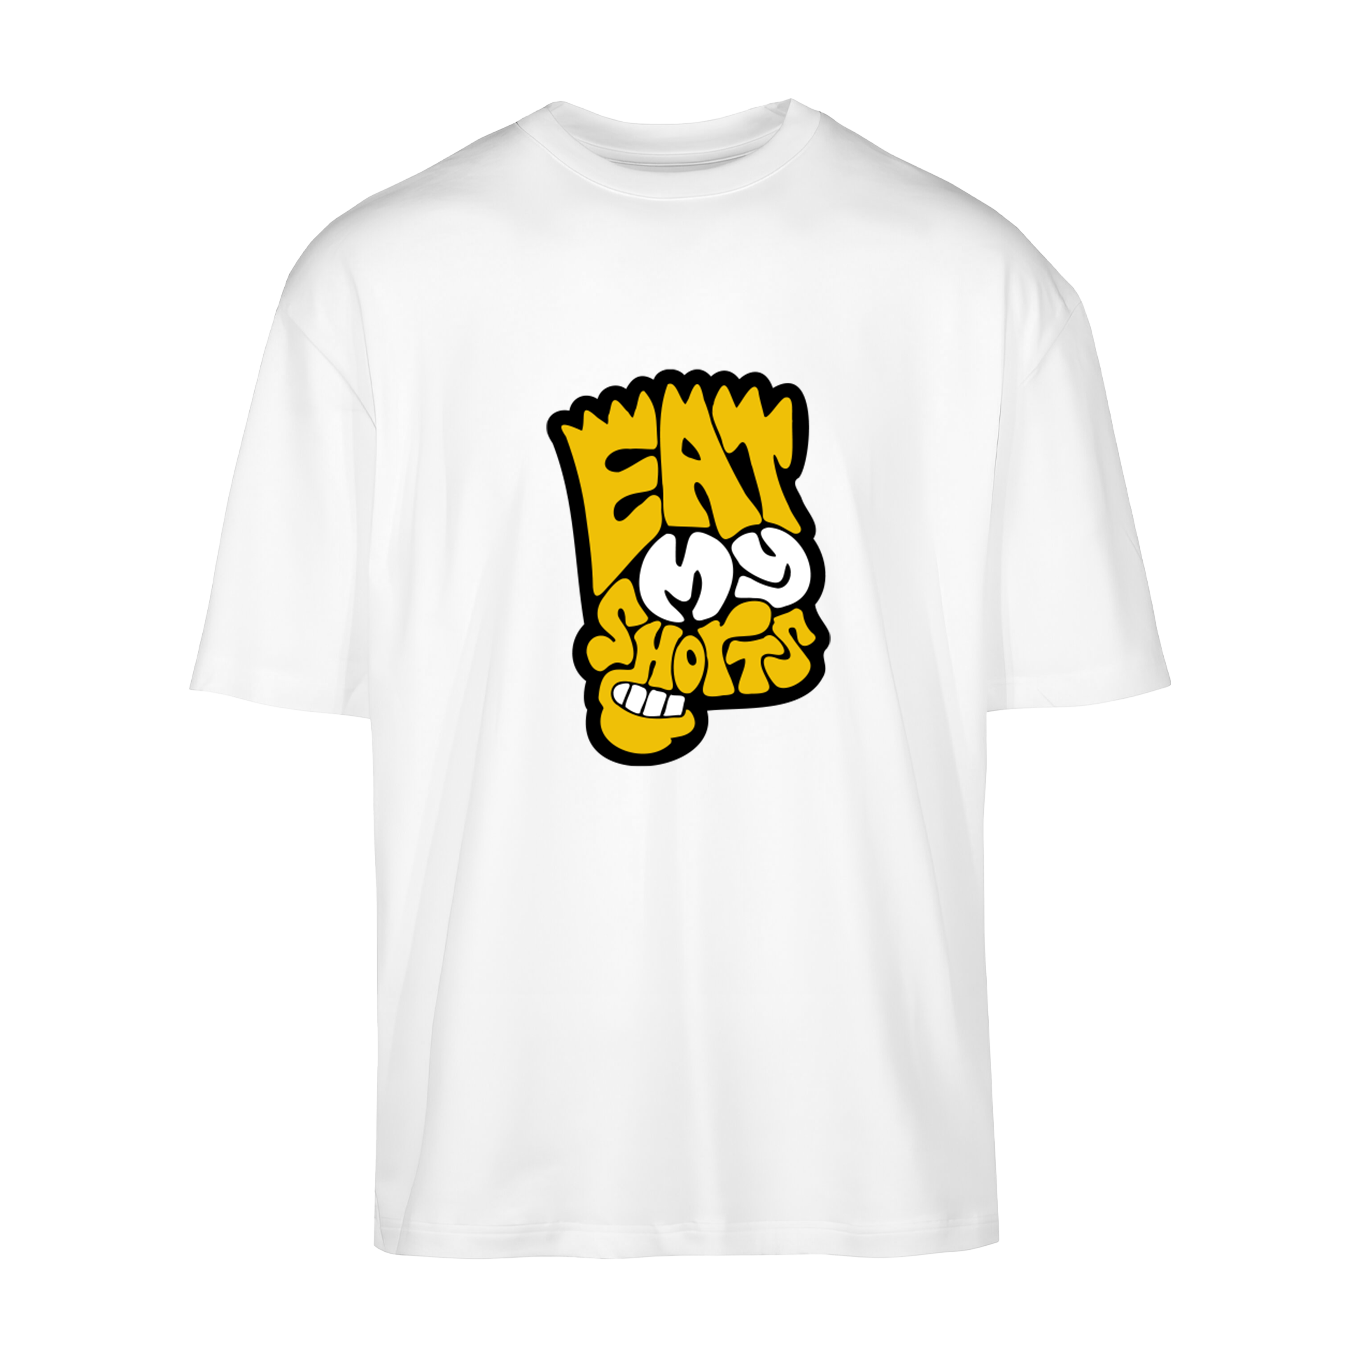 T-shirt "Eat My Shorts"